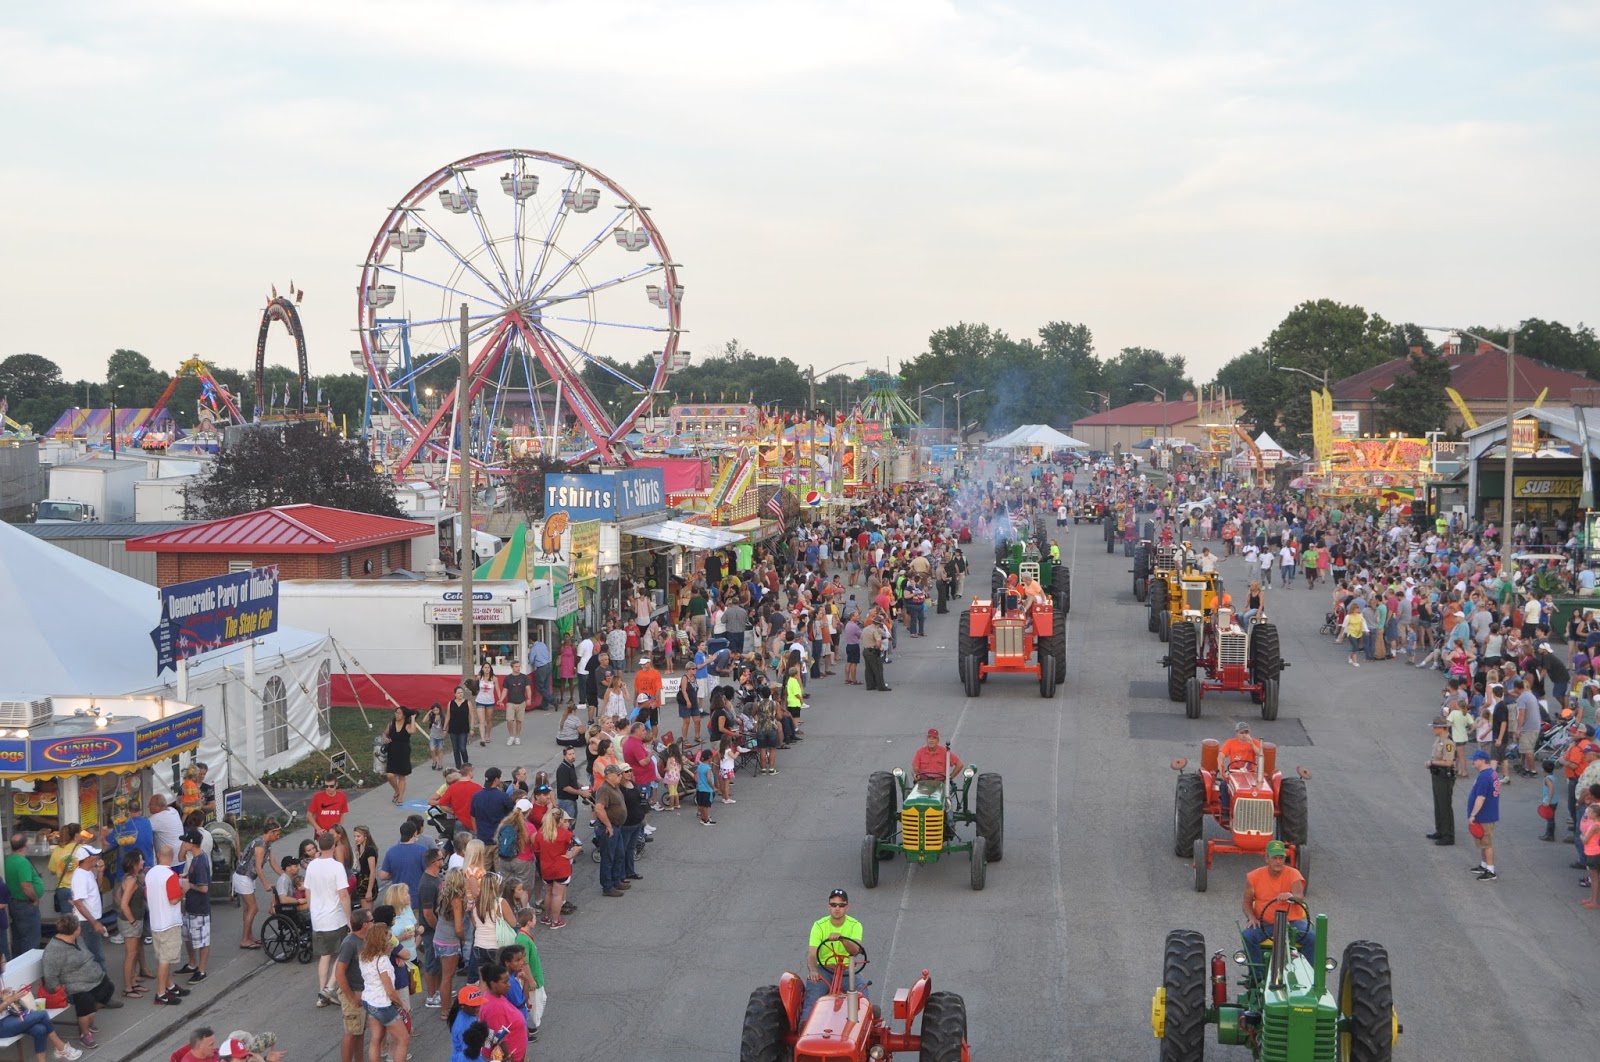 2015 Illinois State Fair Aug 13 23 Springfield, IL